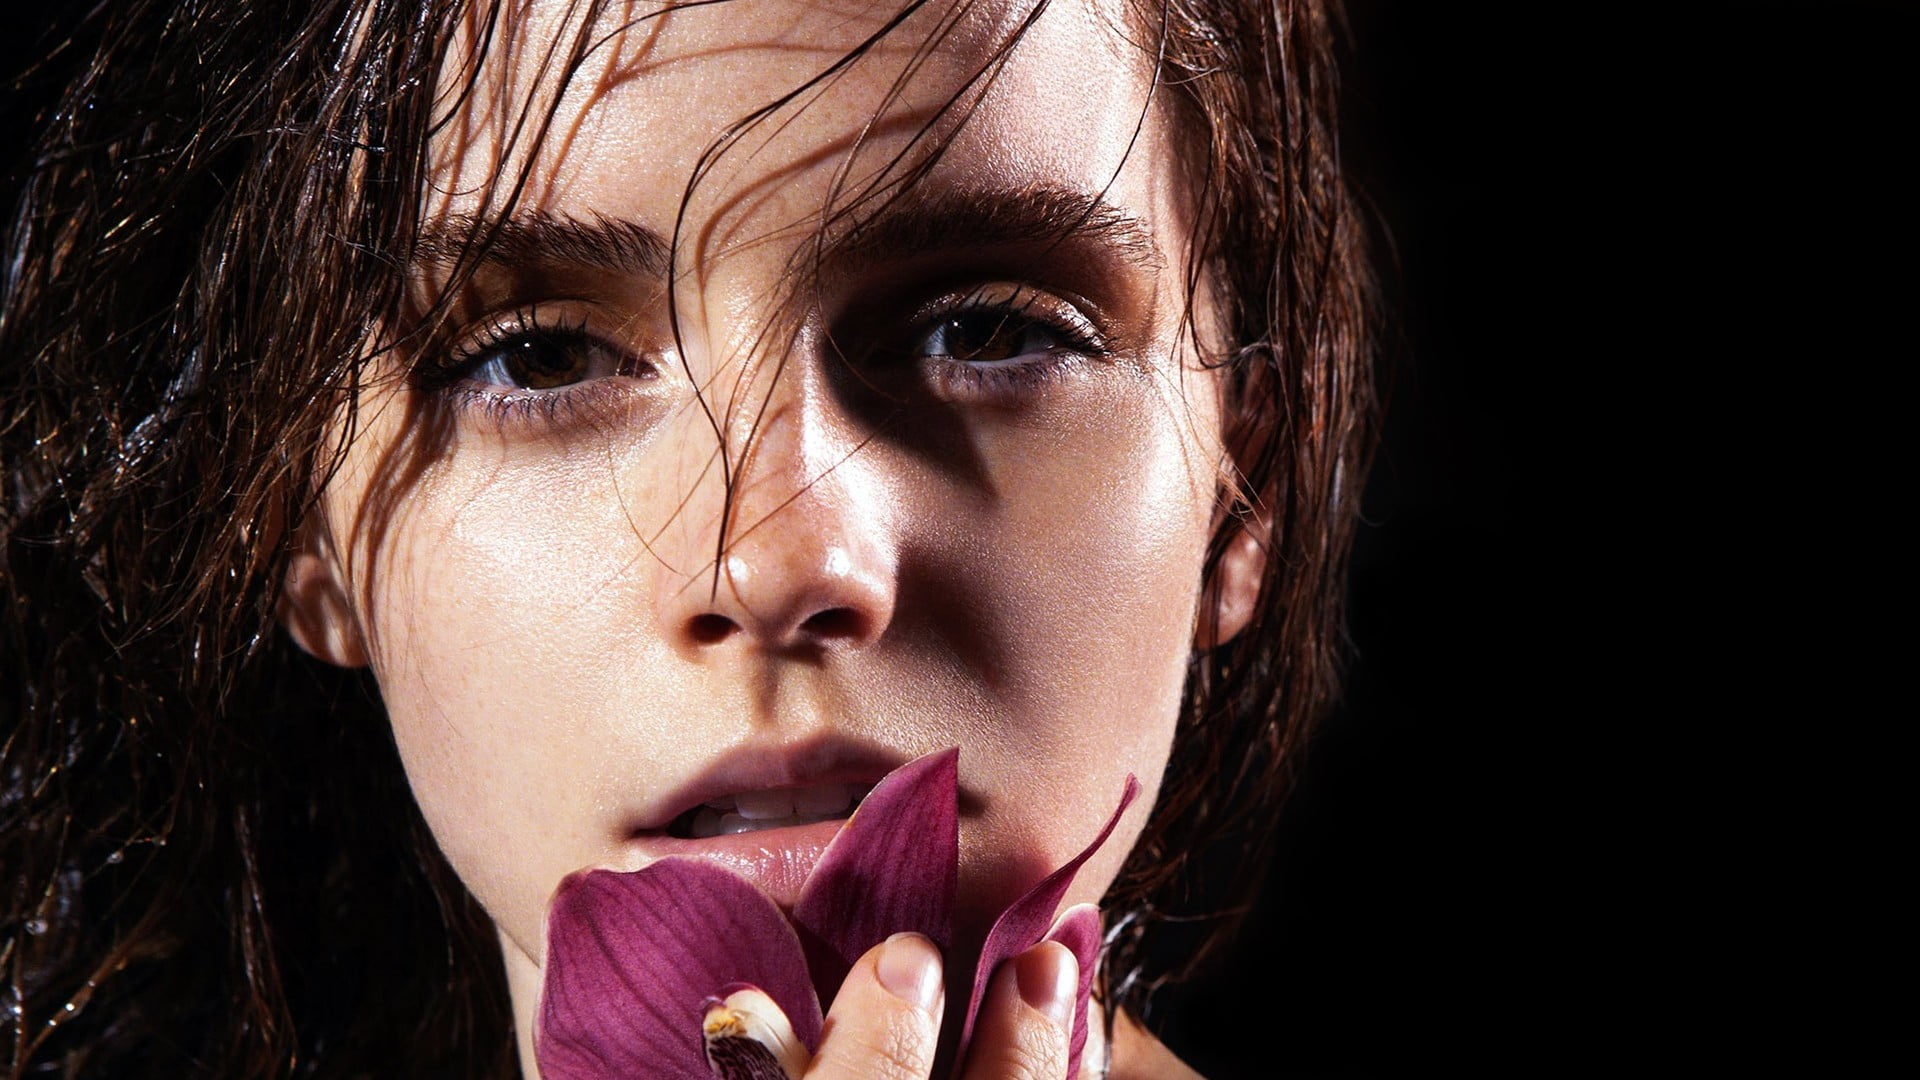 Emma Watson, women, actress, face, one person, headshot, portrait